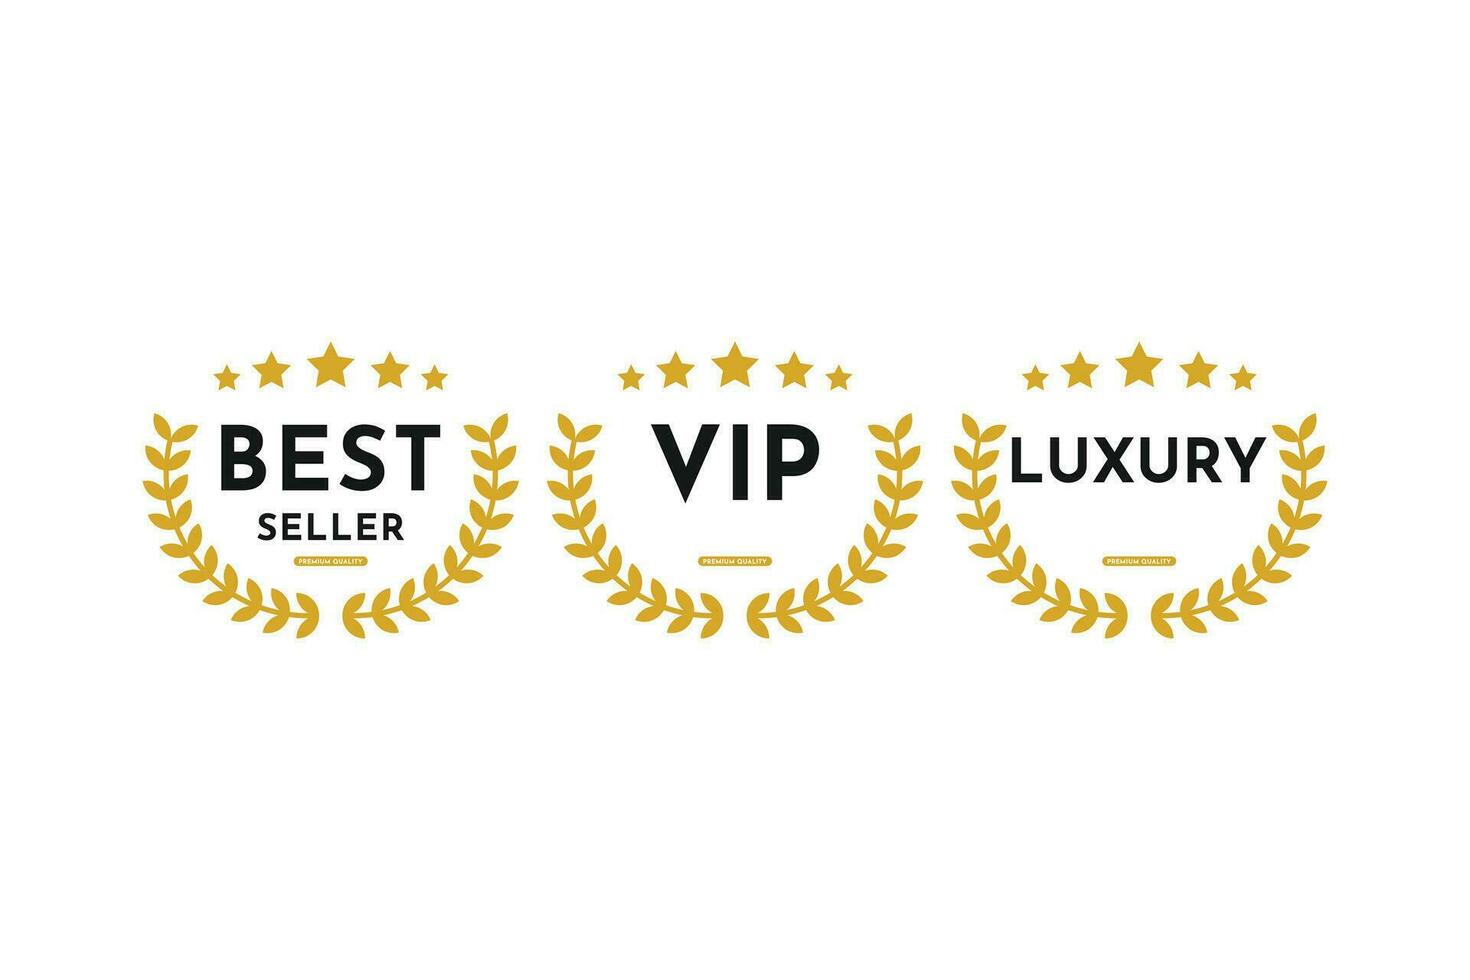 Best seller badge logo design template, vip logo design and luxury